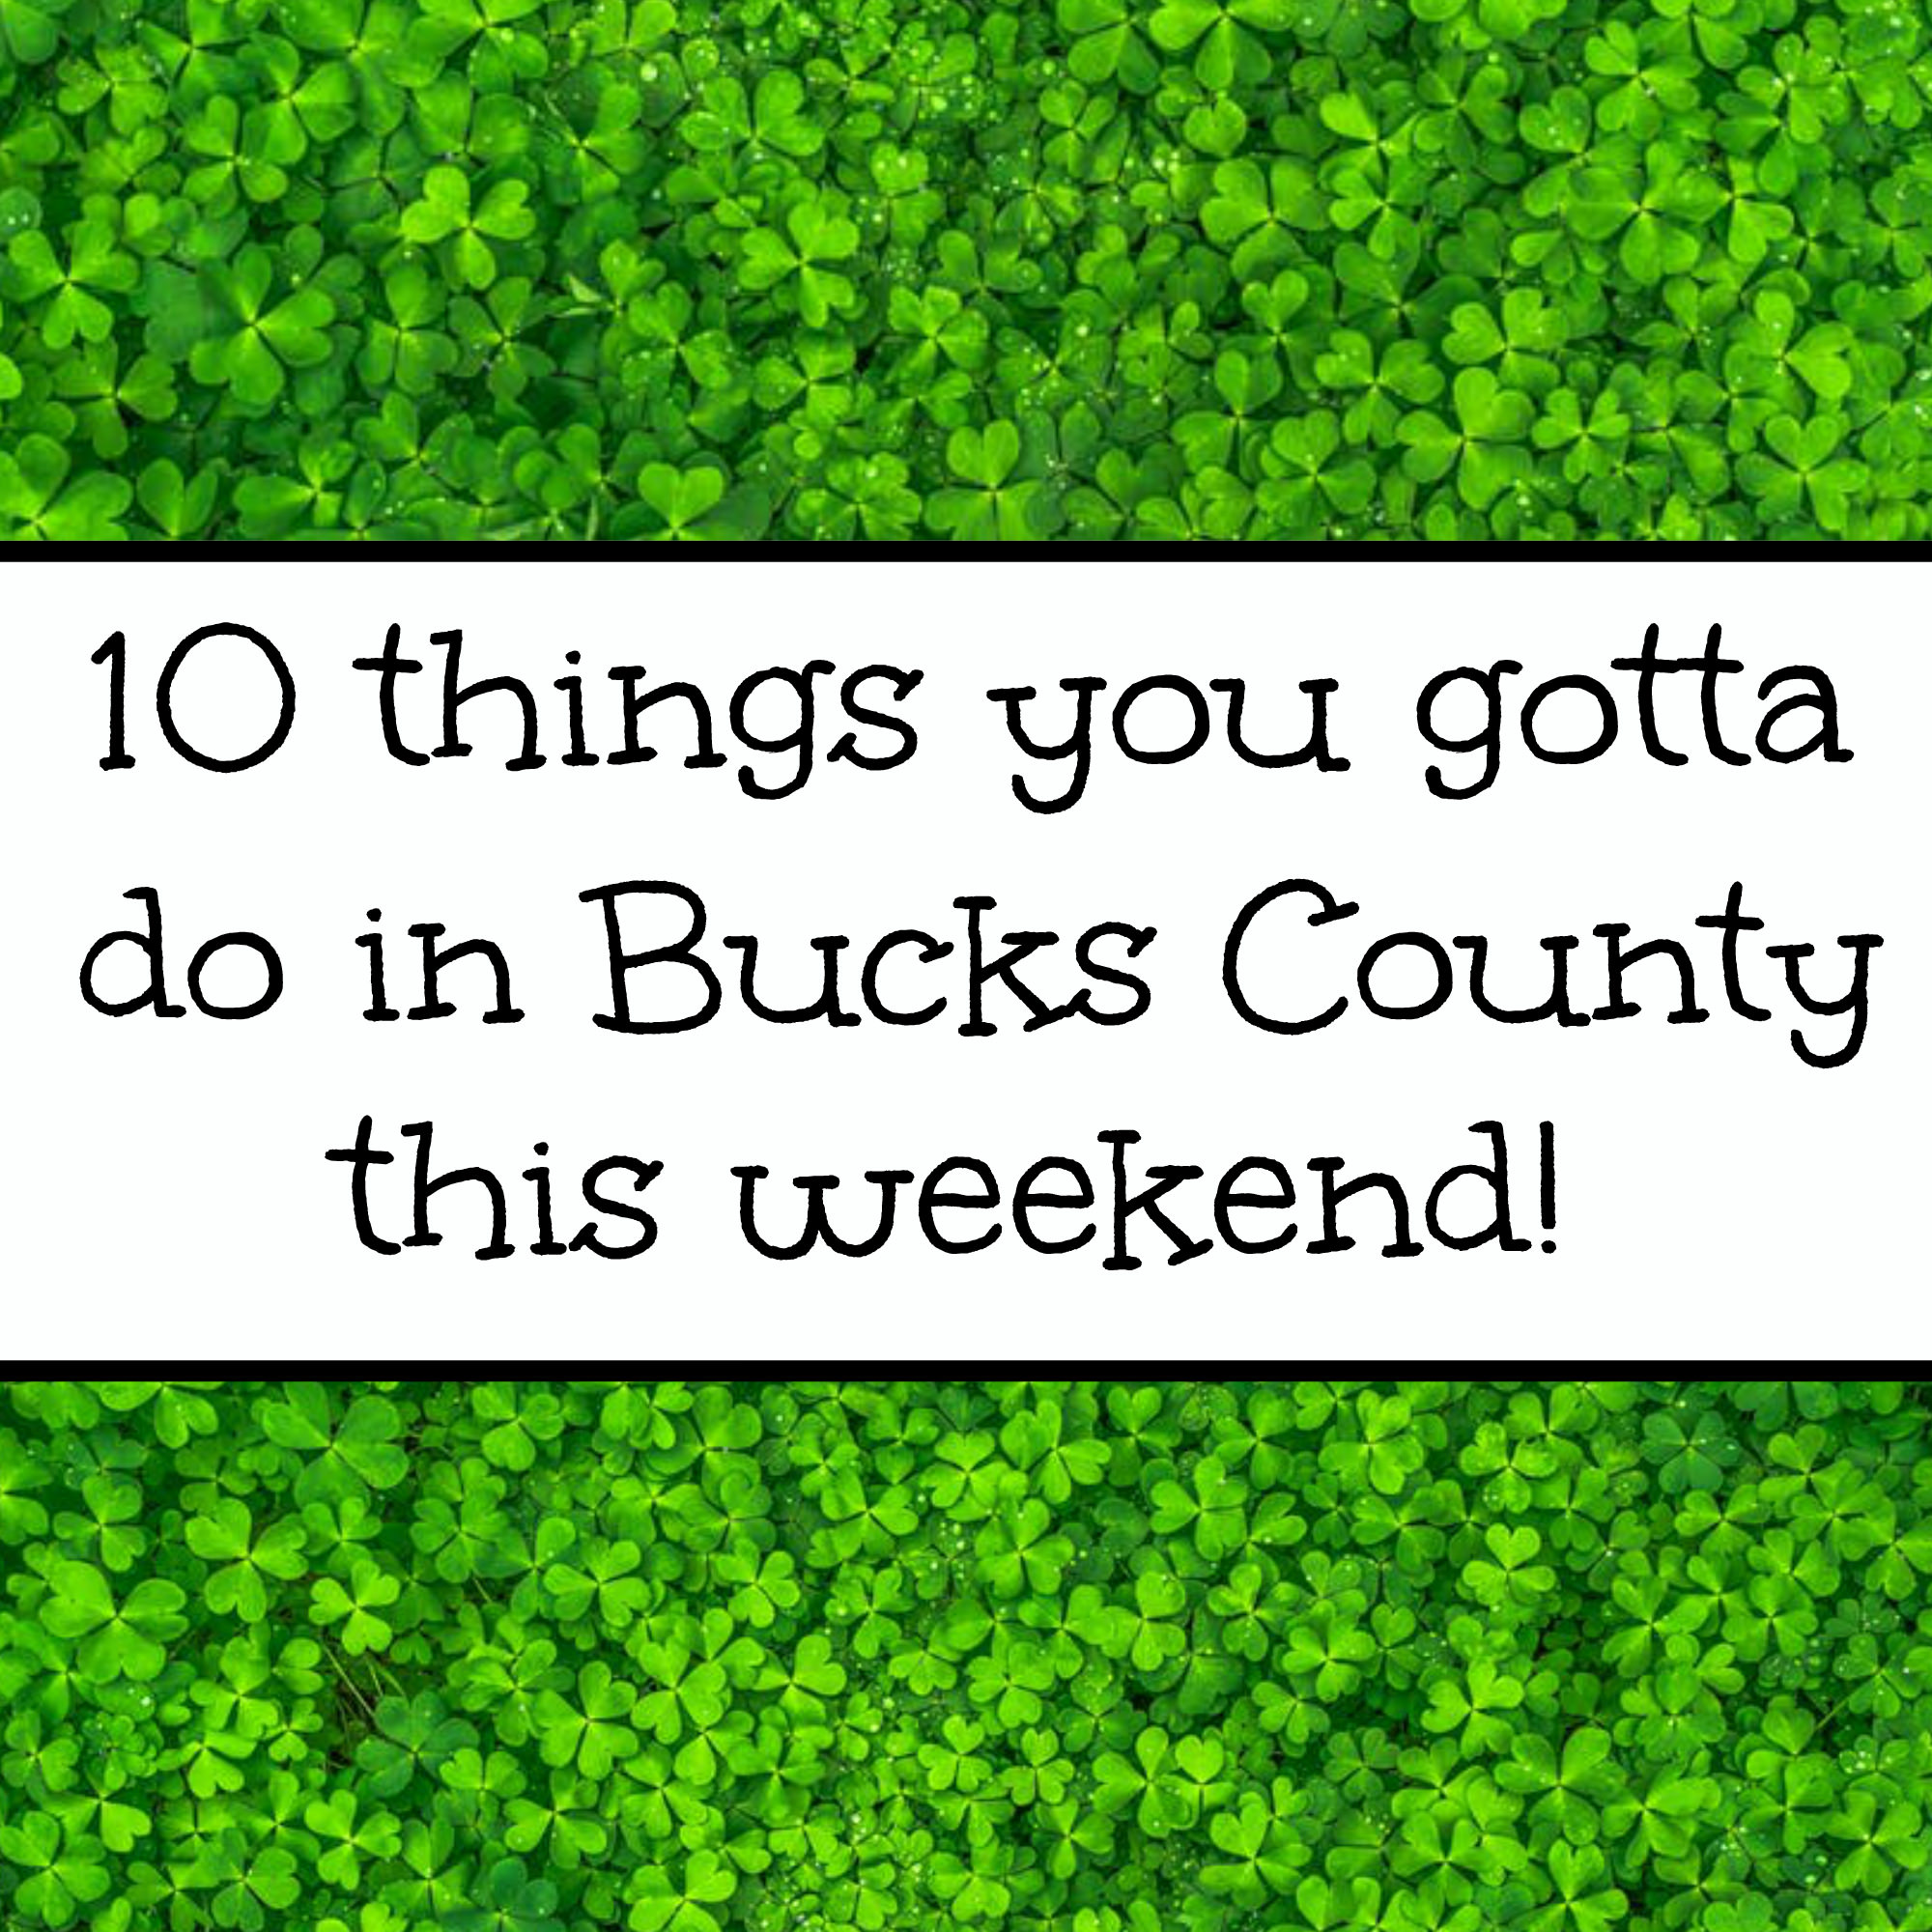 10 things you gotta do in bucks county